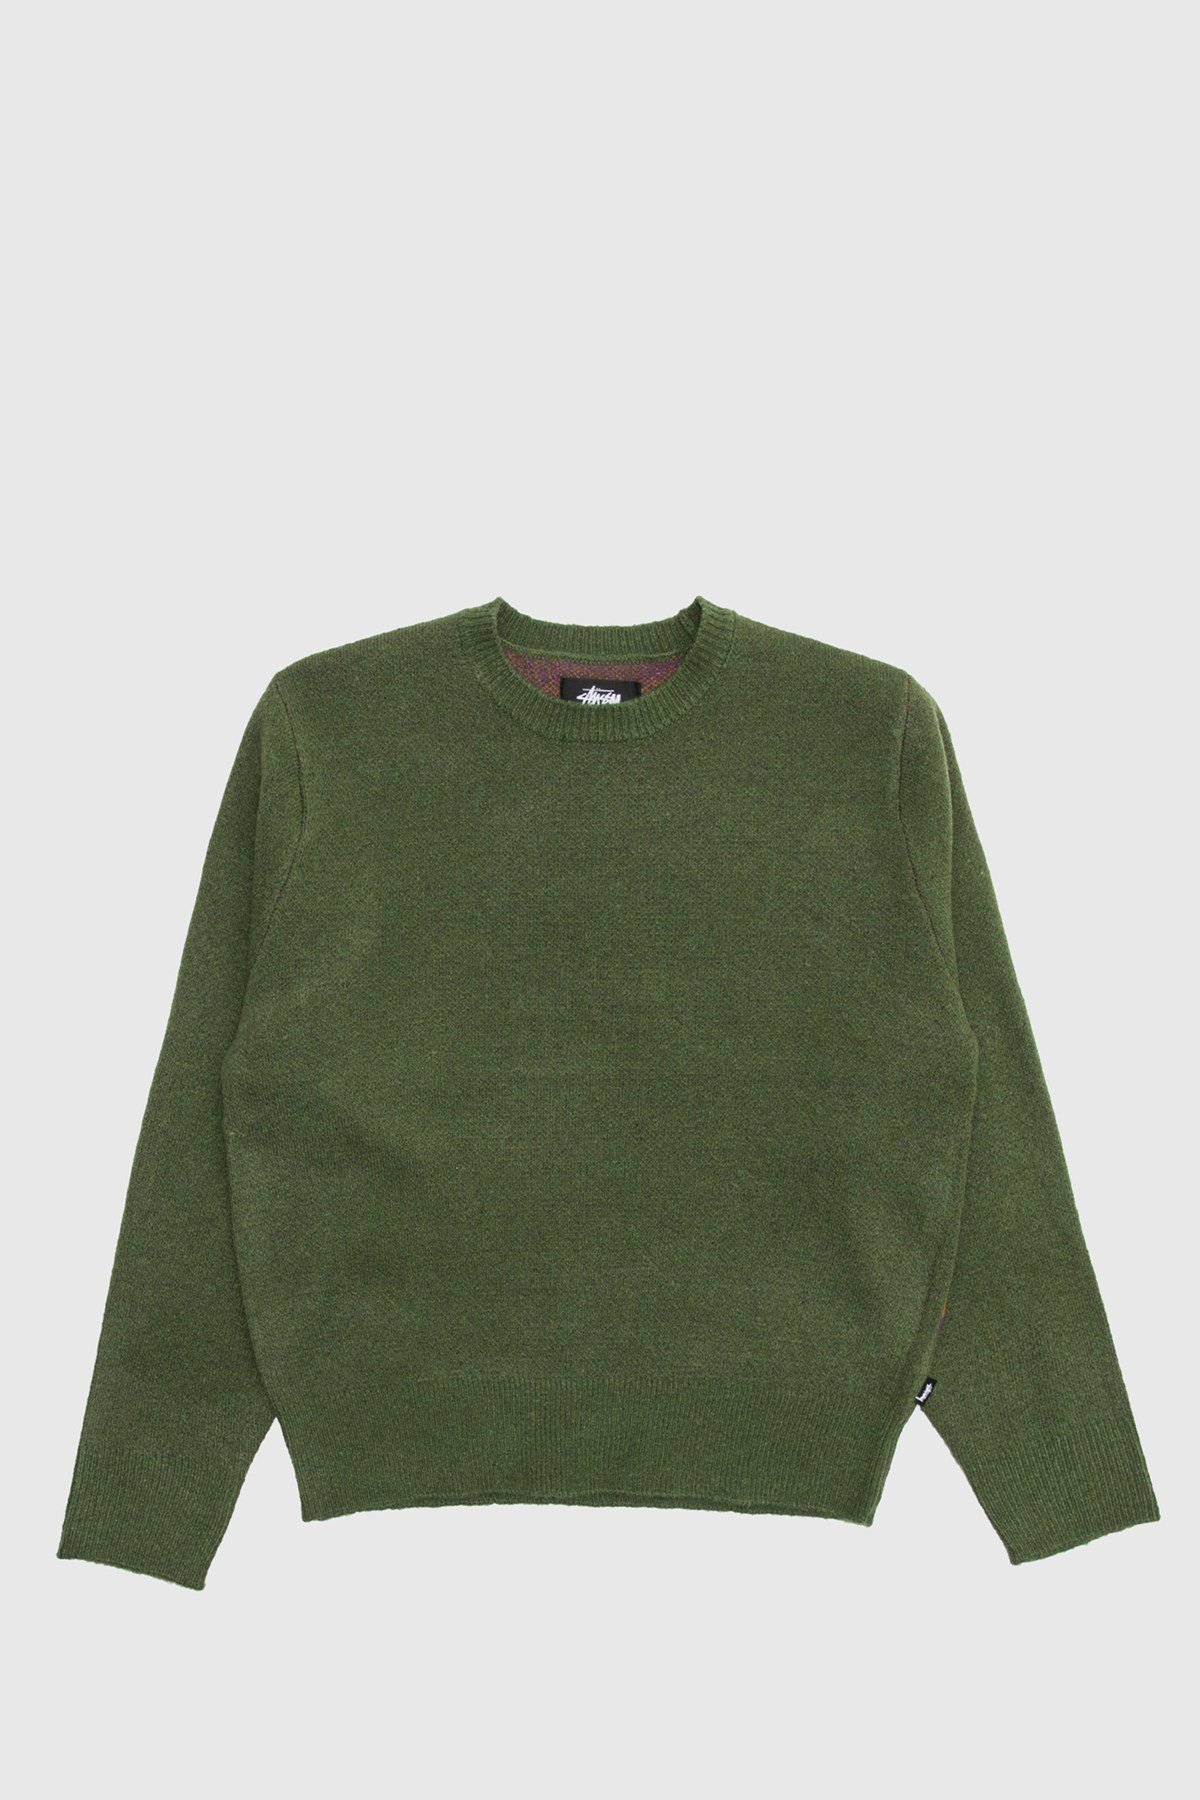 Stüssy Paisley Sweater Green | WoodWood.com